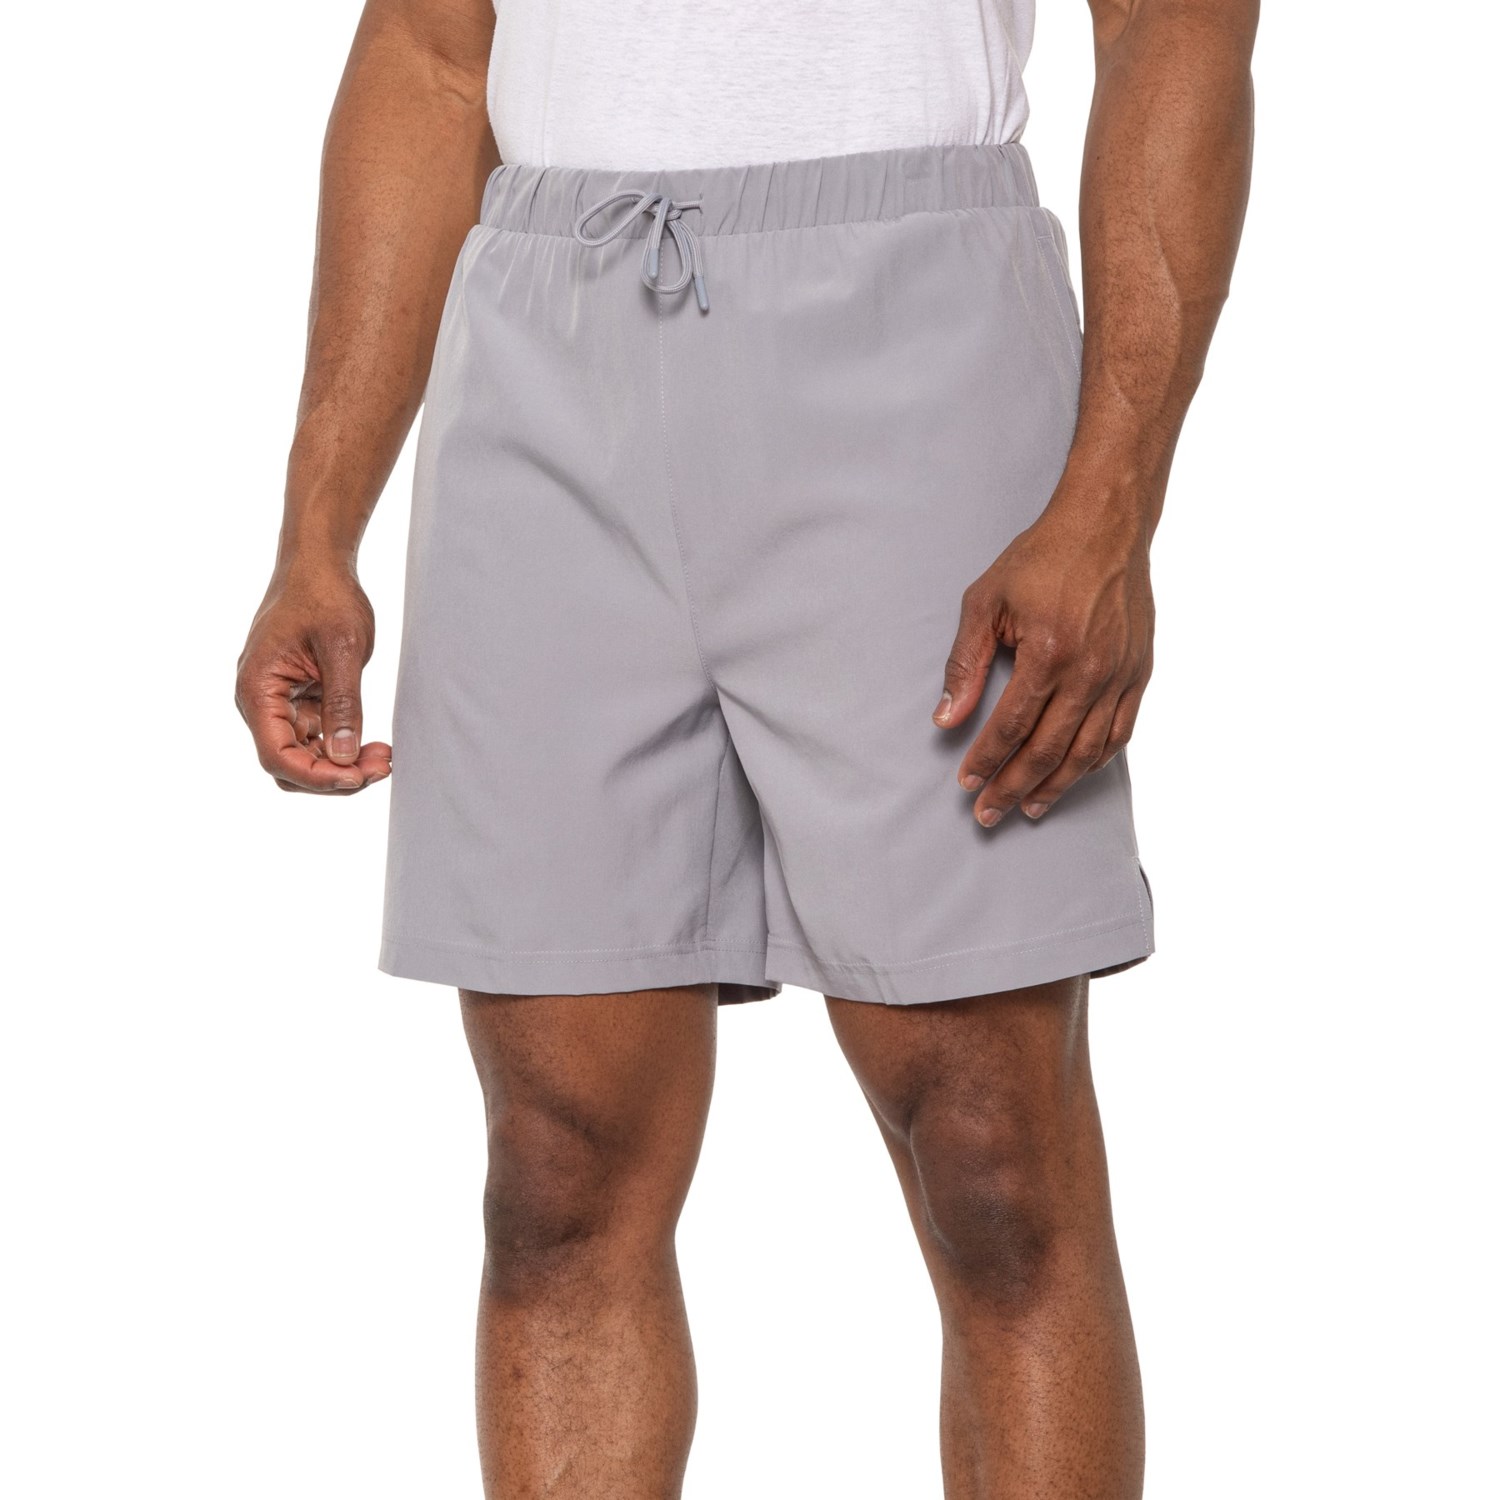 Reebok Alpha Running Shorts (For Men) - Save 43%